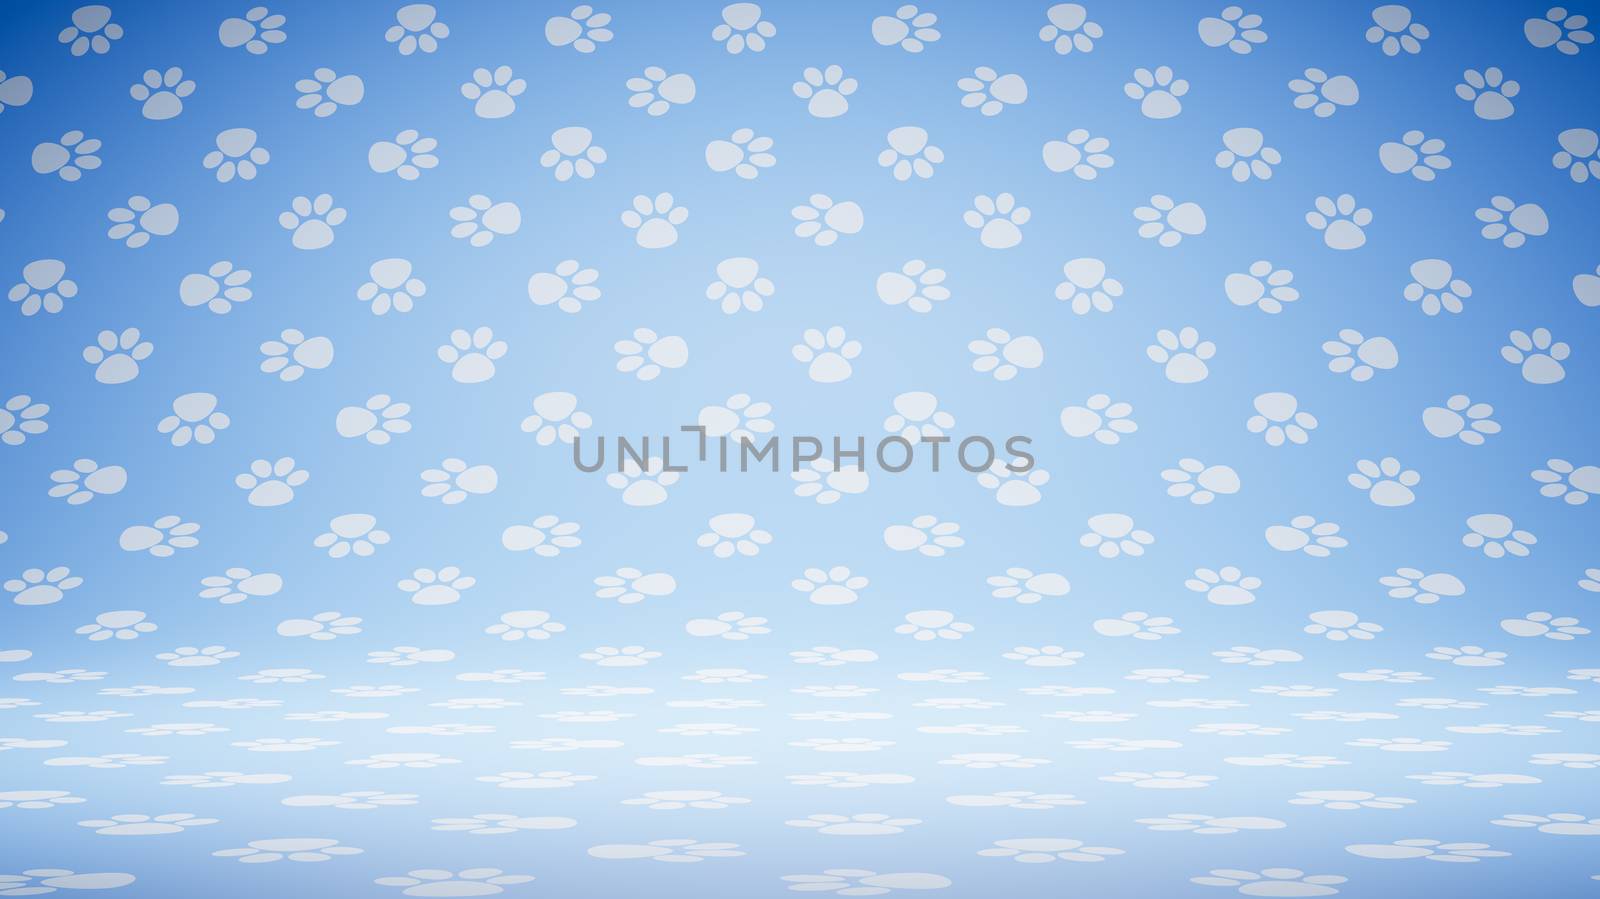 Empty Blank Blue and White Pet Footprint Symbol Pattern Studio Background 3D Render Illustration